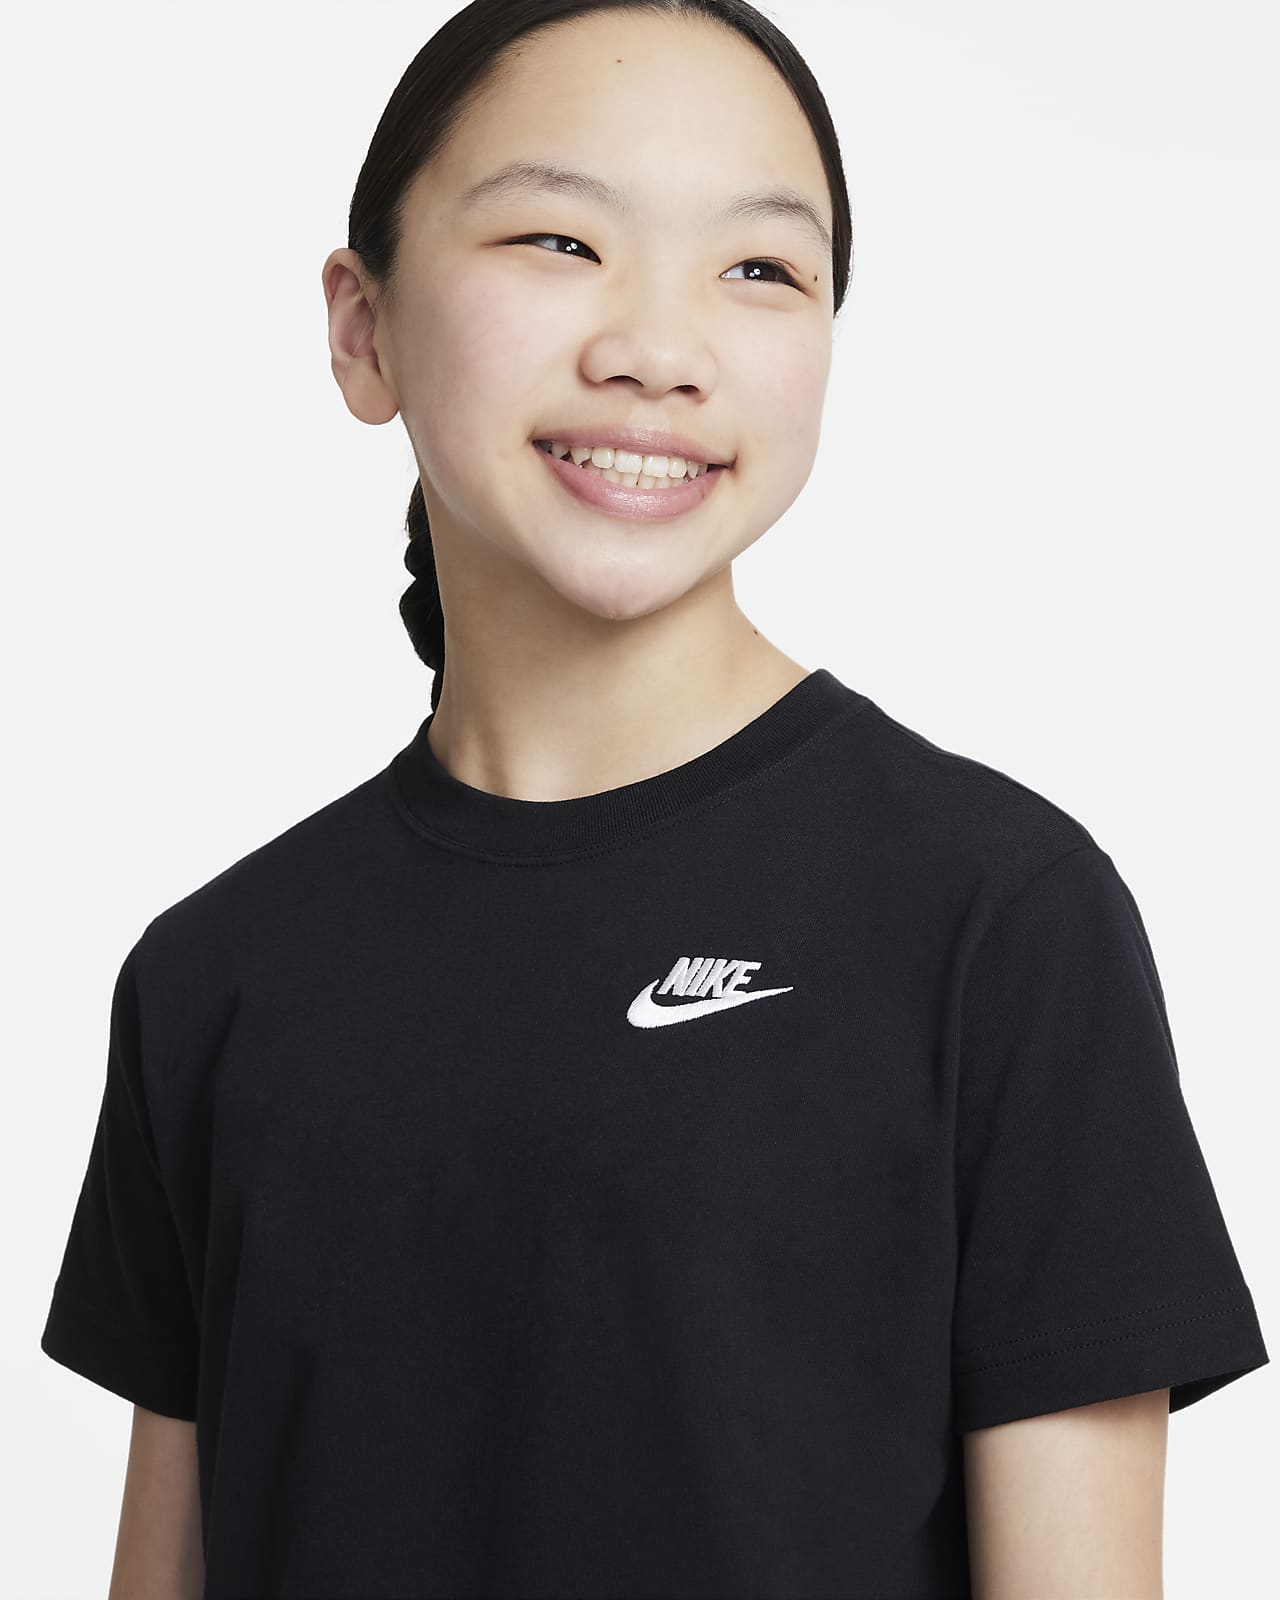 Big (Girls\') Sportswear Kids\' Nike T-Shirt.